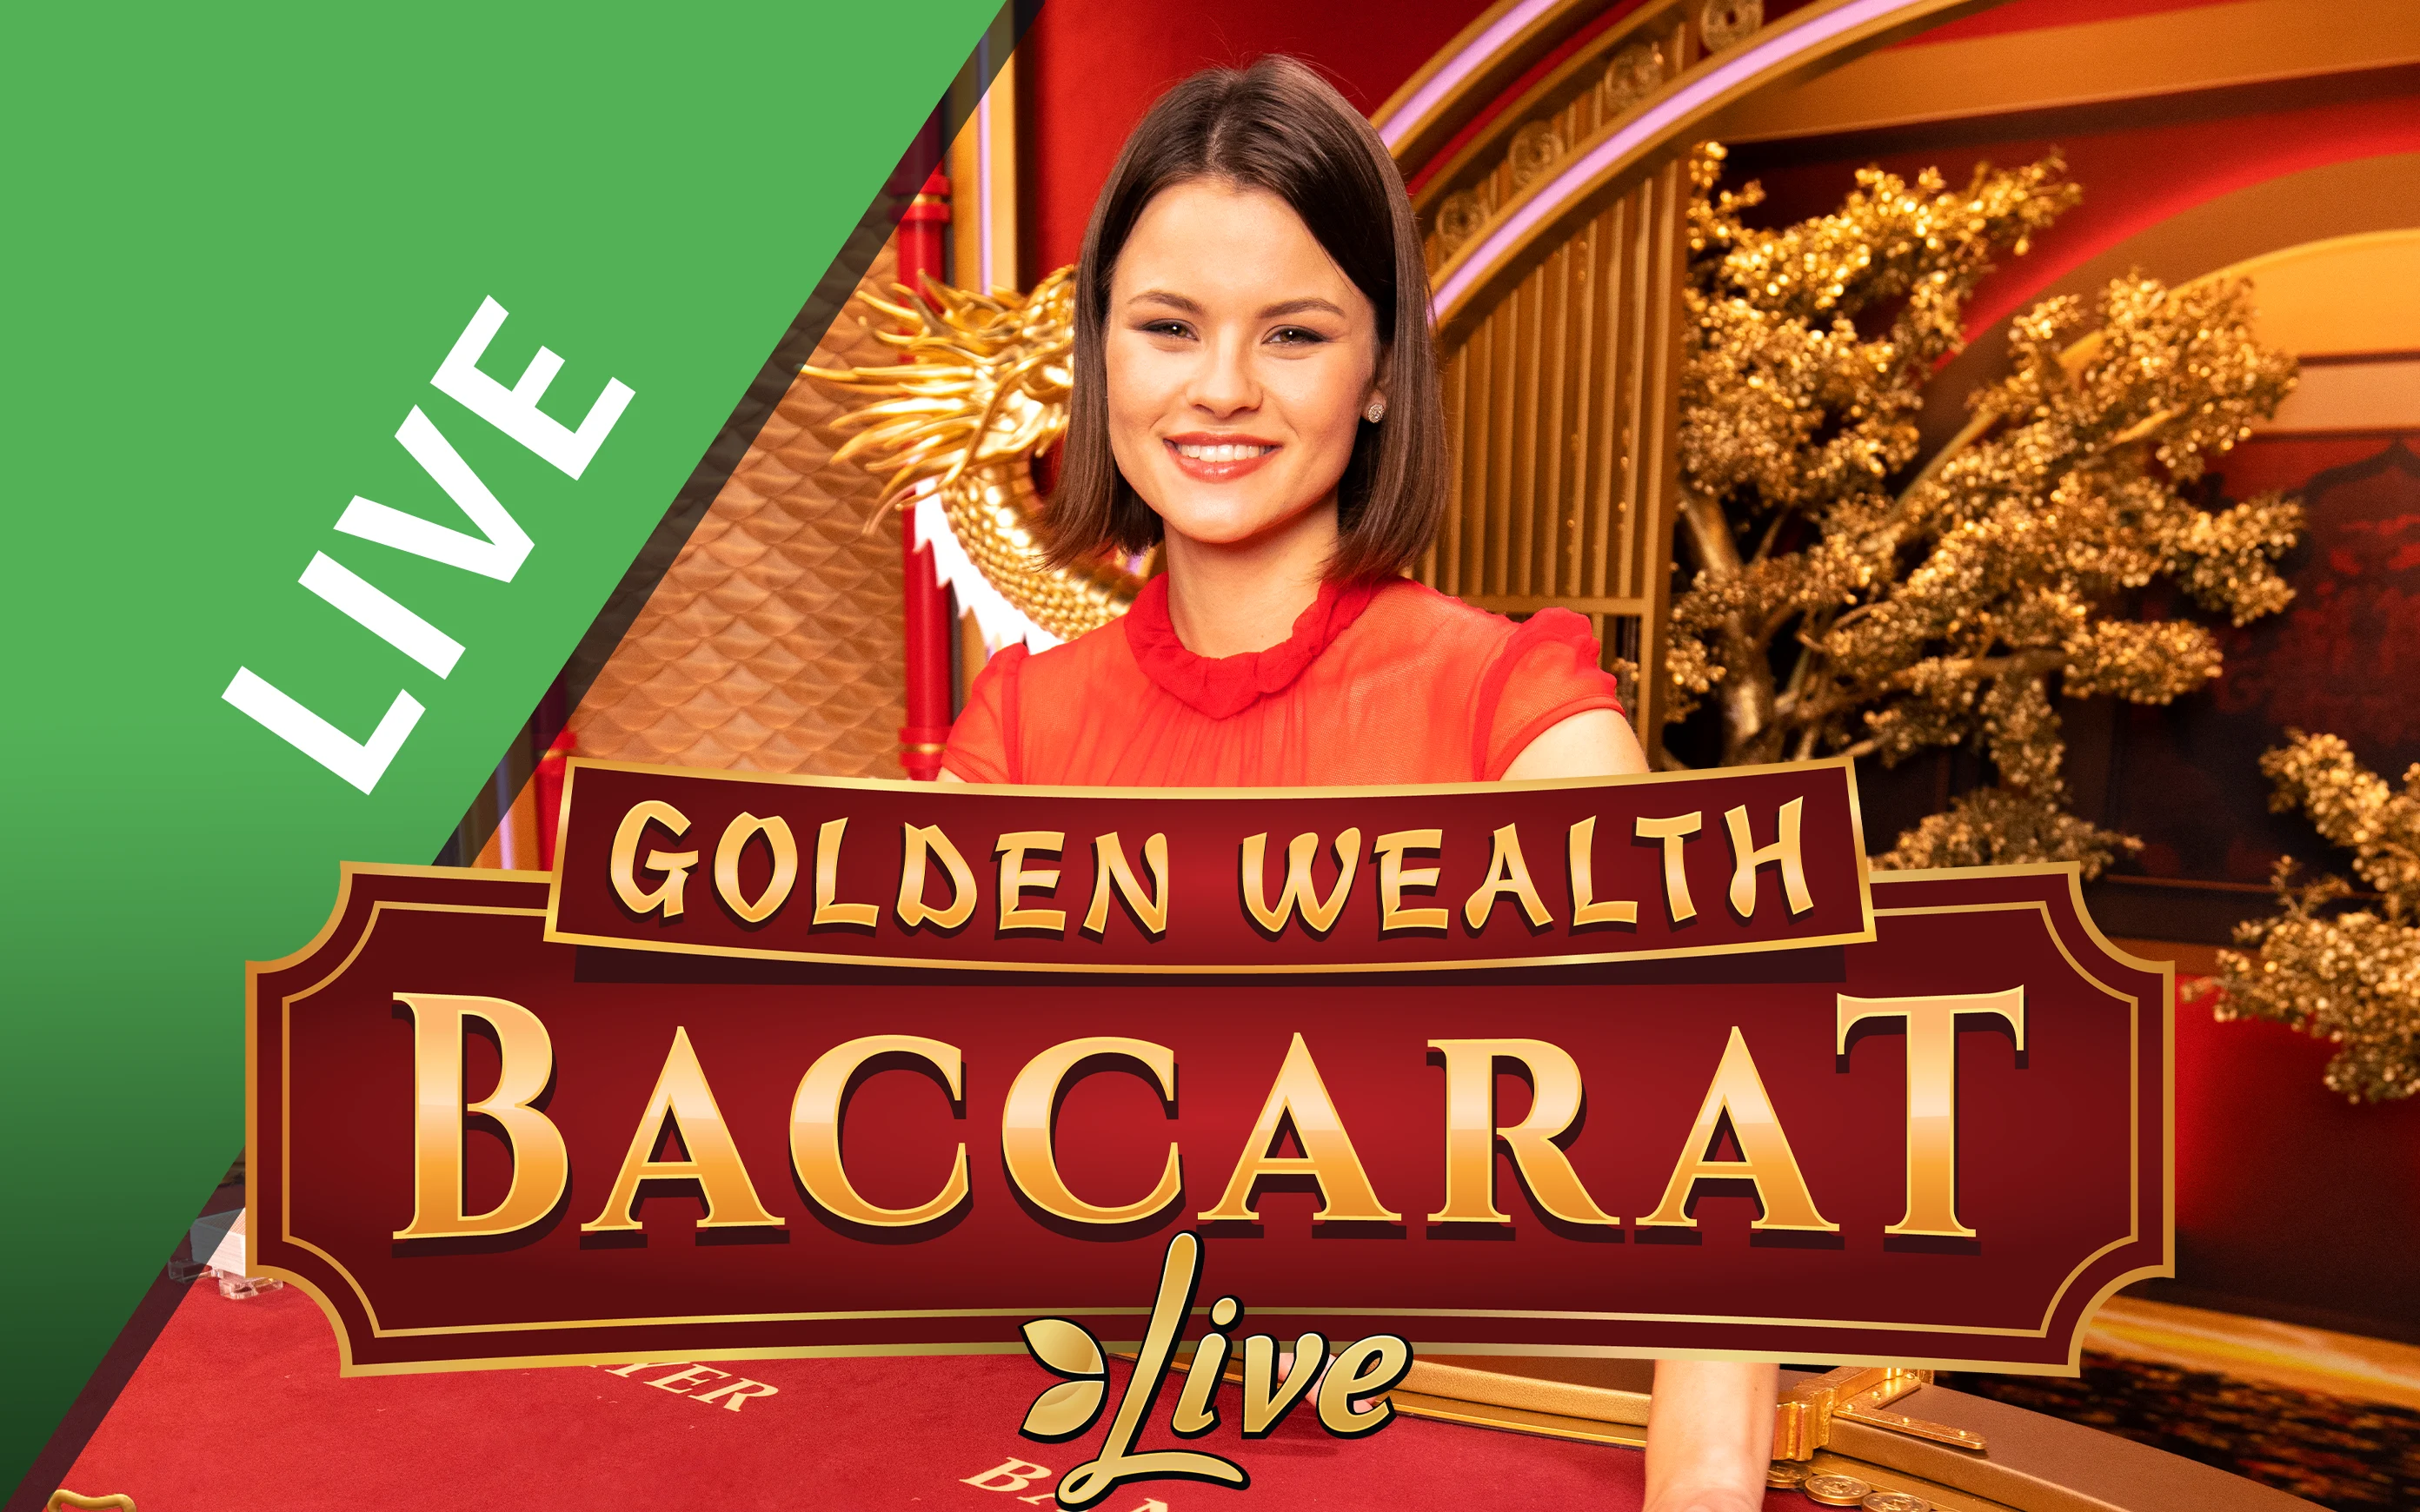 Gioca a Golden Wealth Baccarat sul casino online Starcasino.be